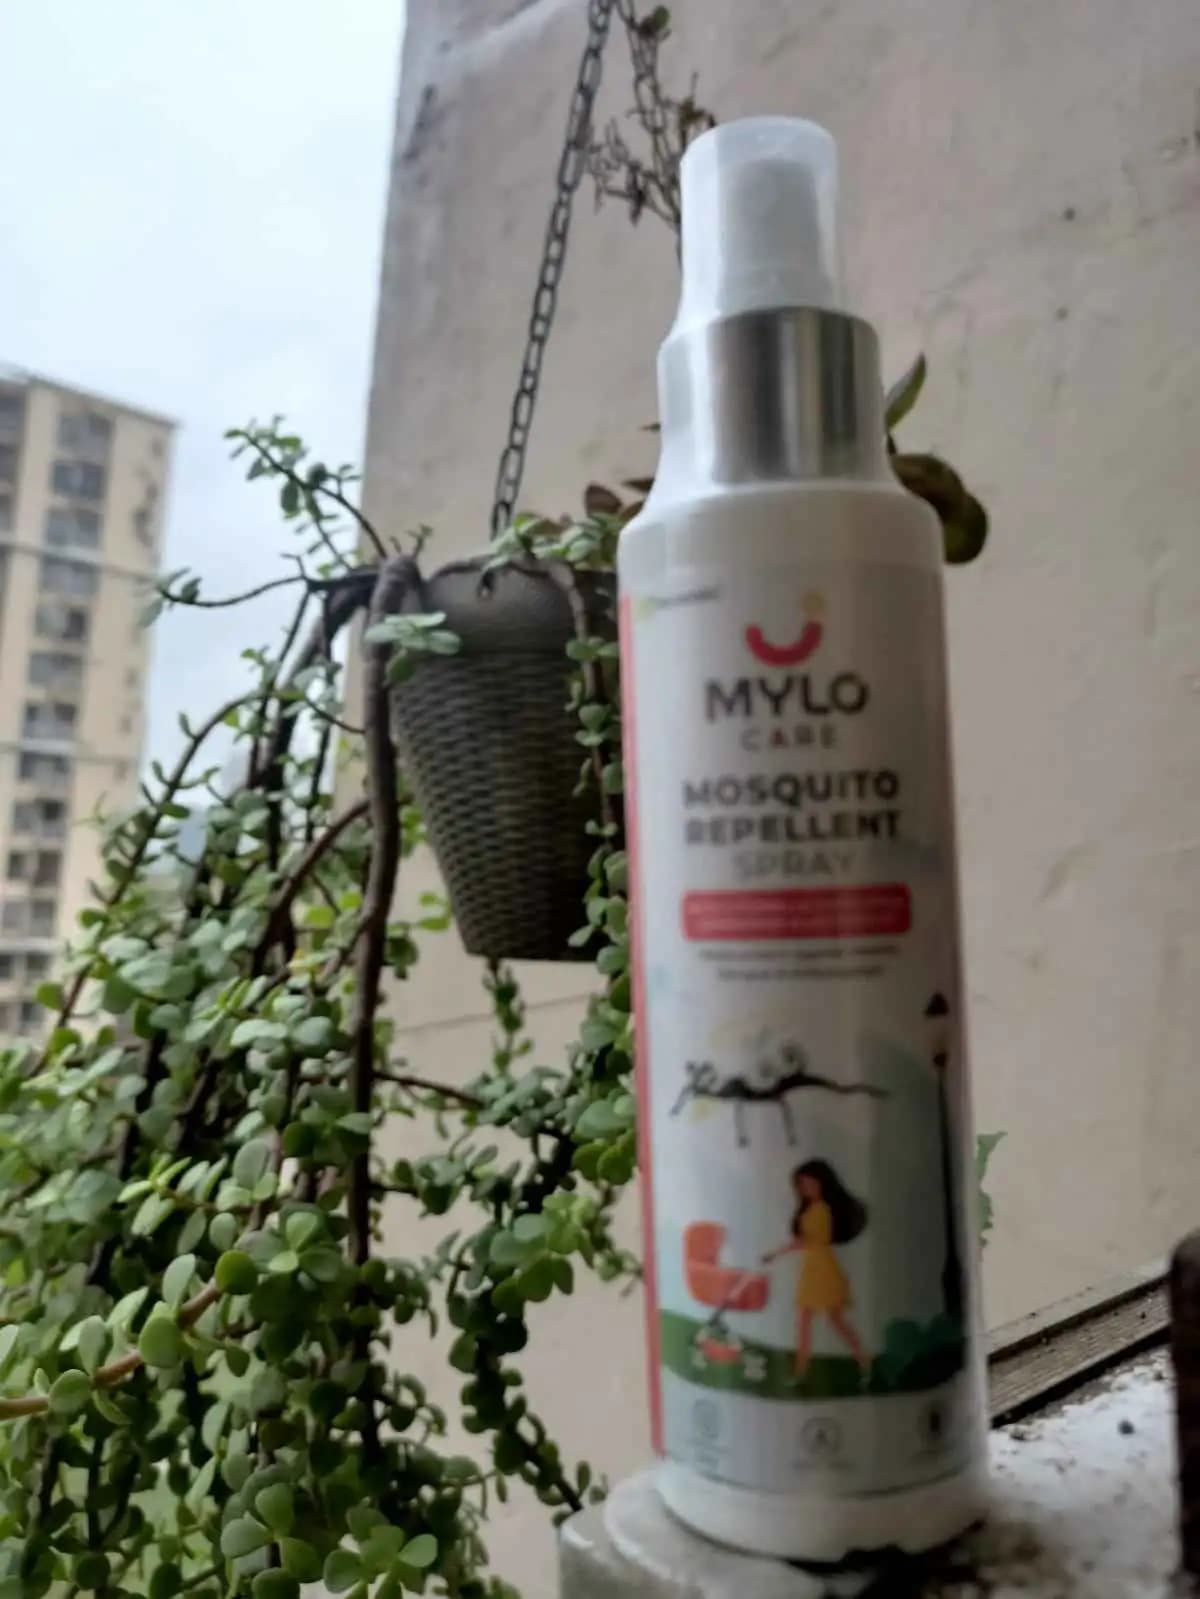 Baby Mosquito Spray | 100% Natural Ingredients | Protects Against Dengue, Malaria, Chikungunya | 100 ml